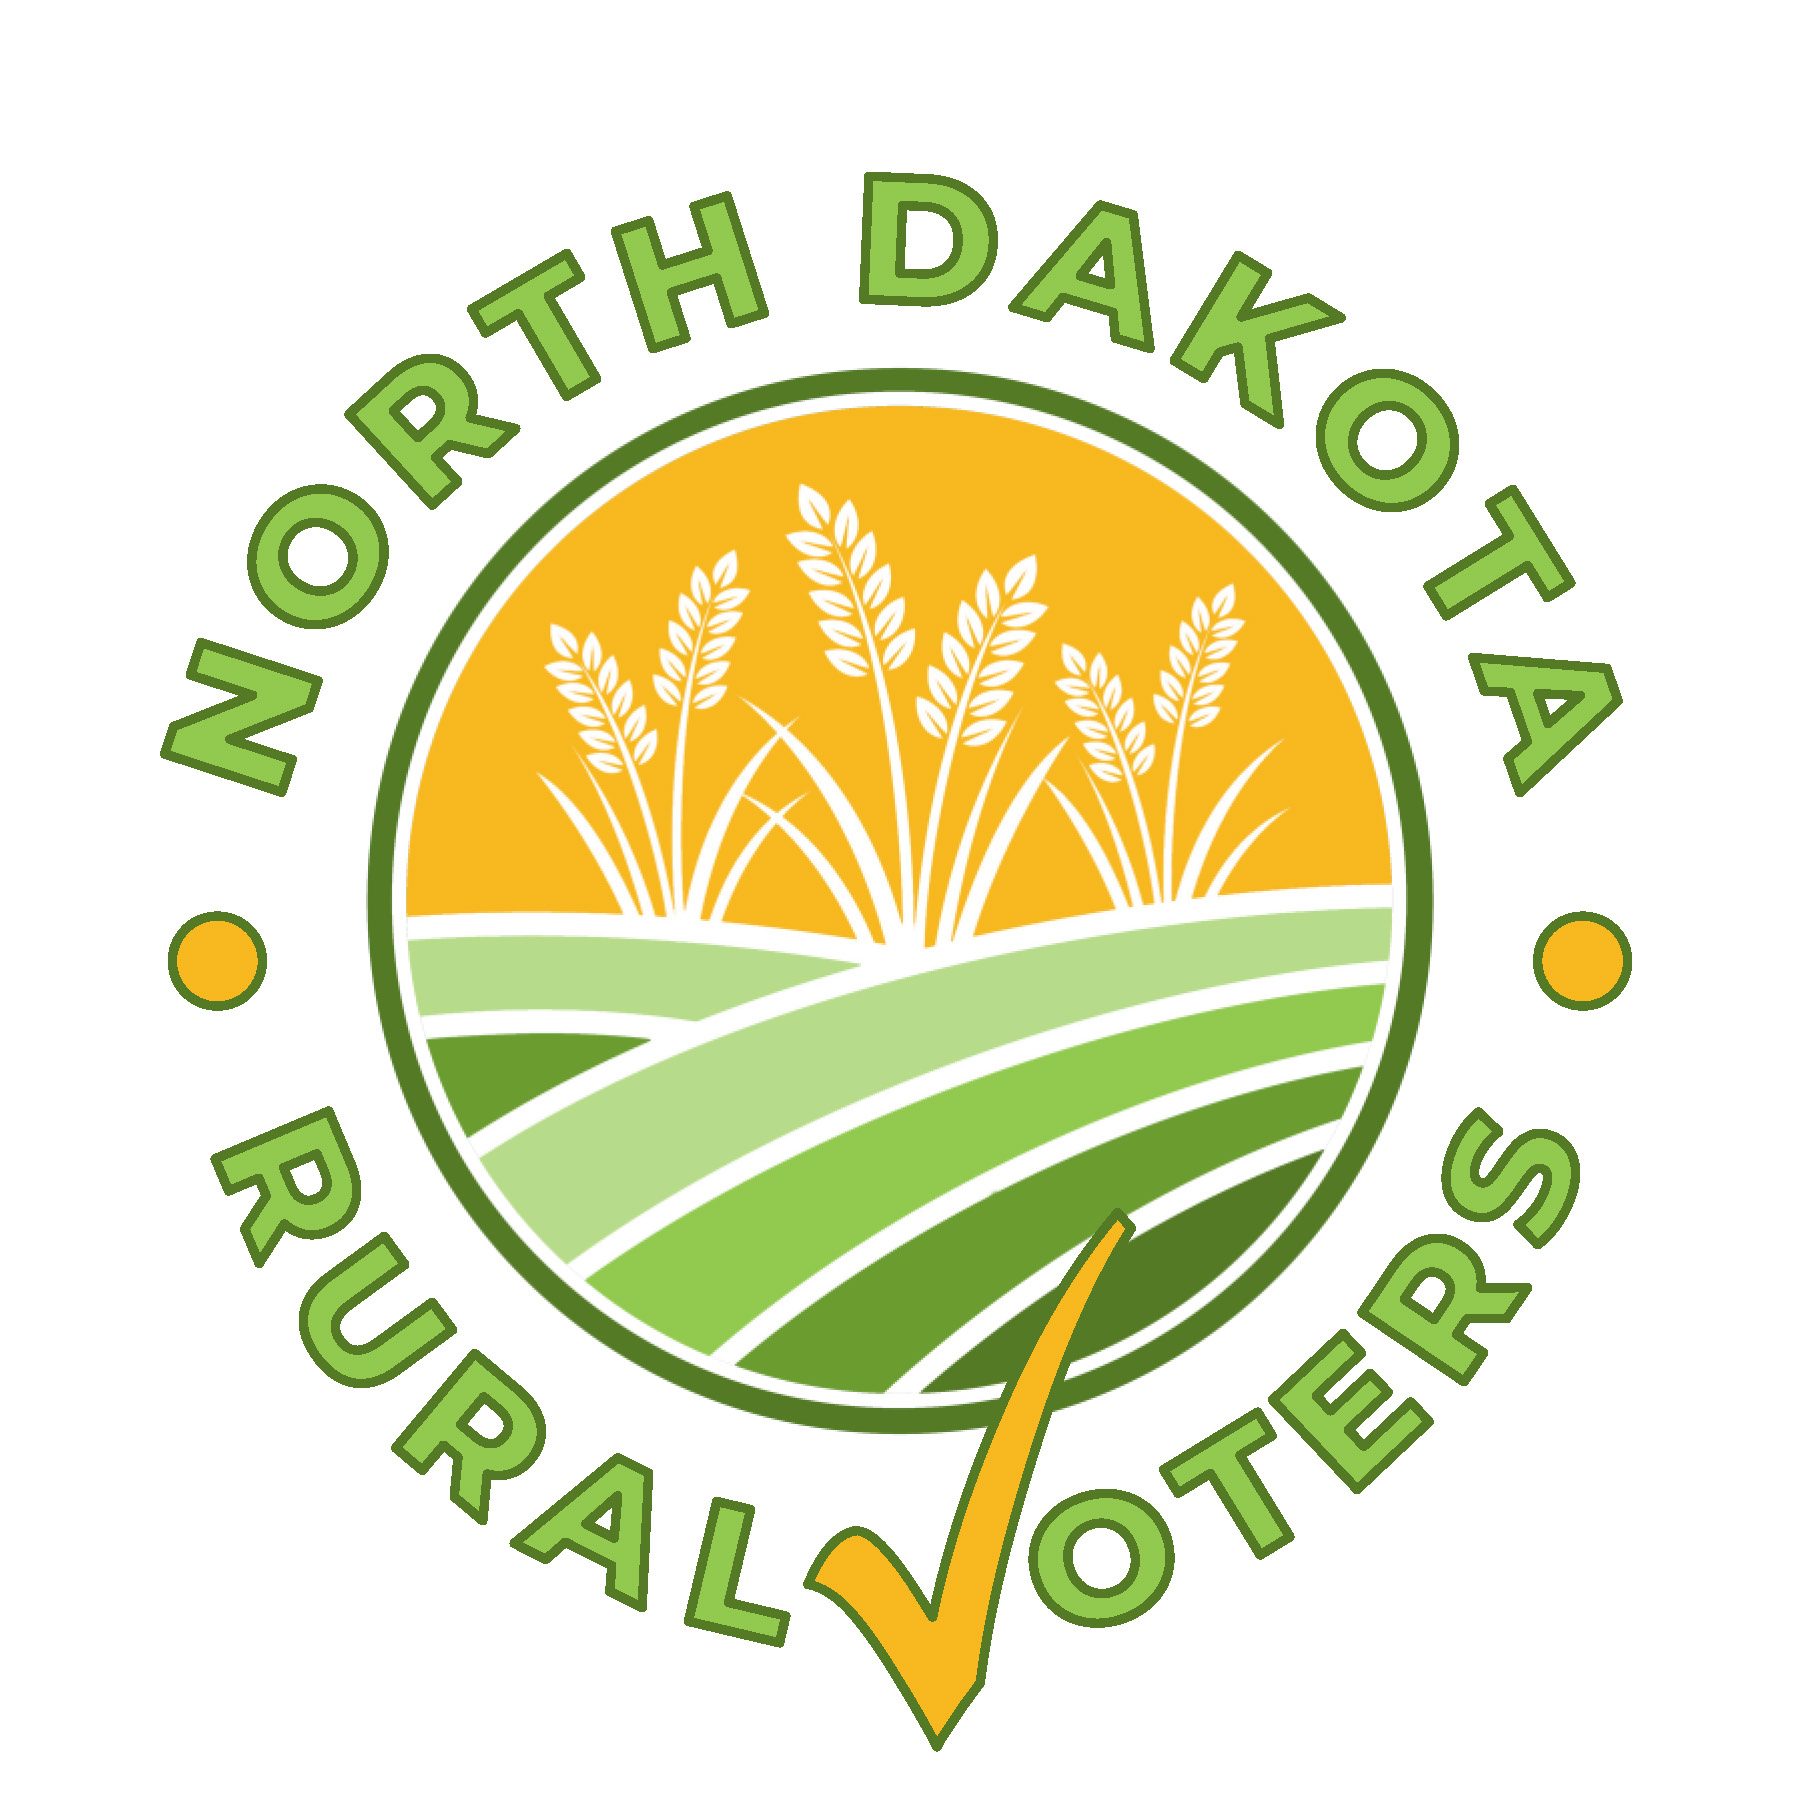 North Dakota Rural Voters